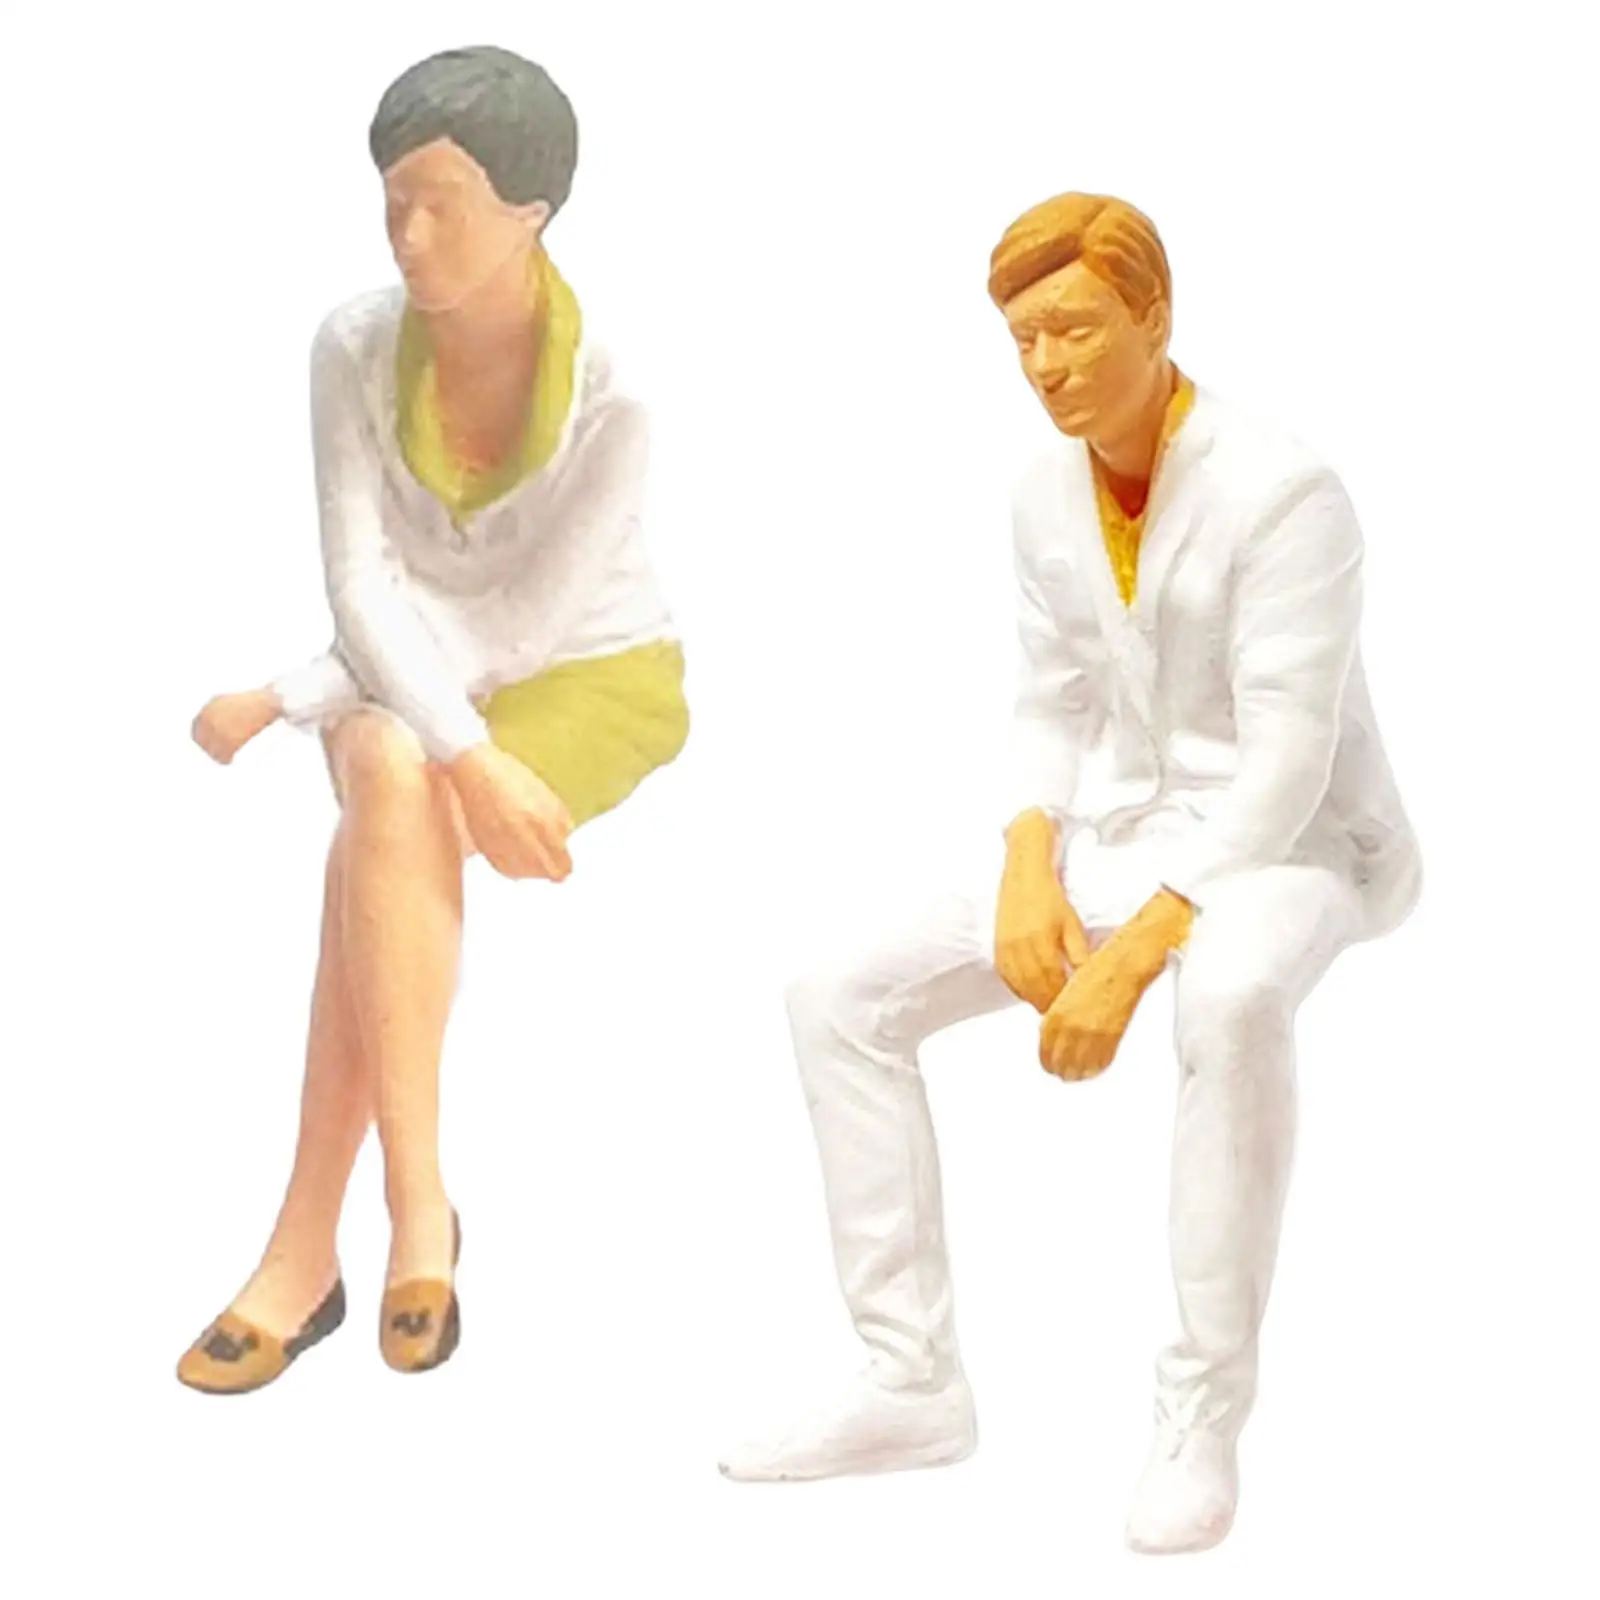 1/64 Painted Figures Simulation Miniature Toy Role Play Figure Miniature Scene